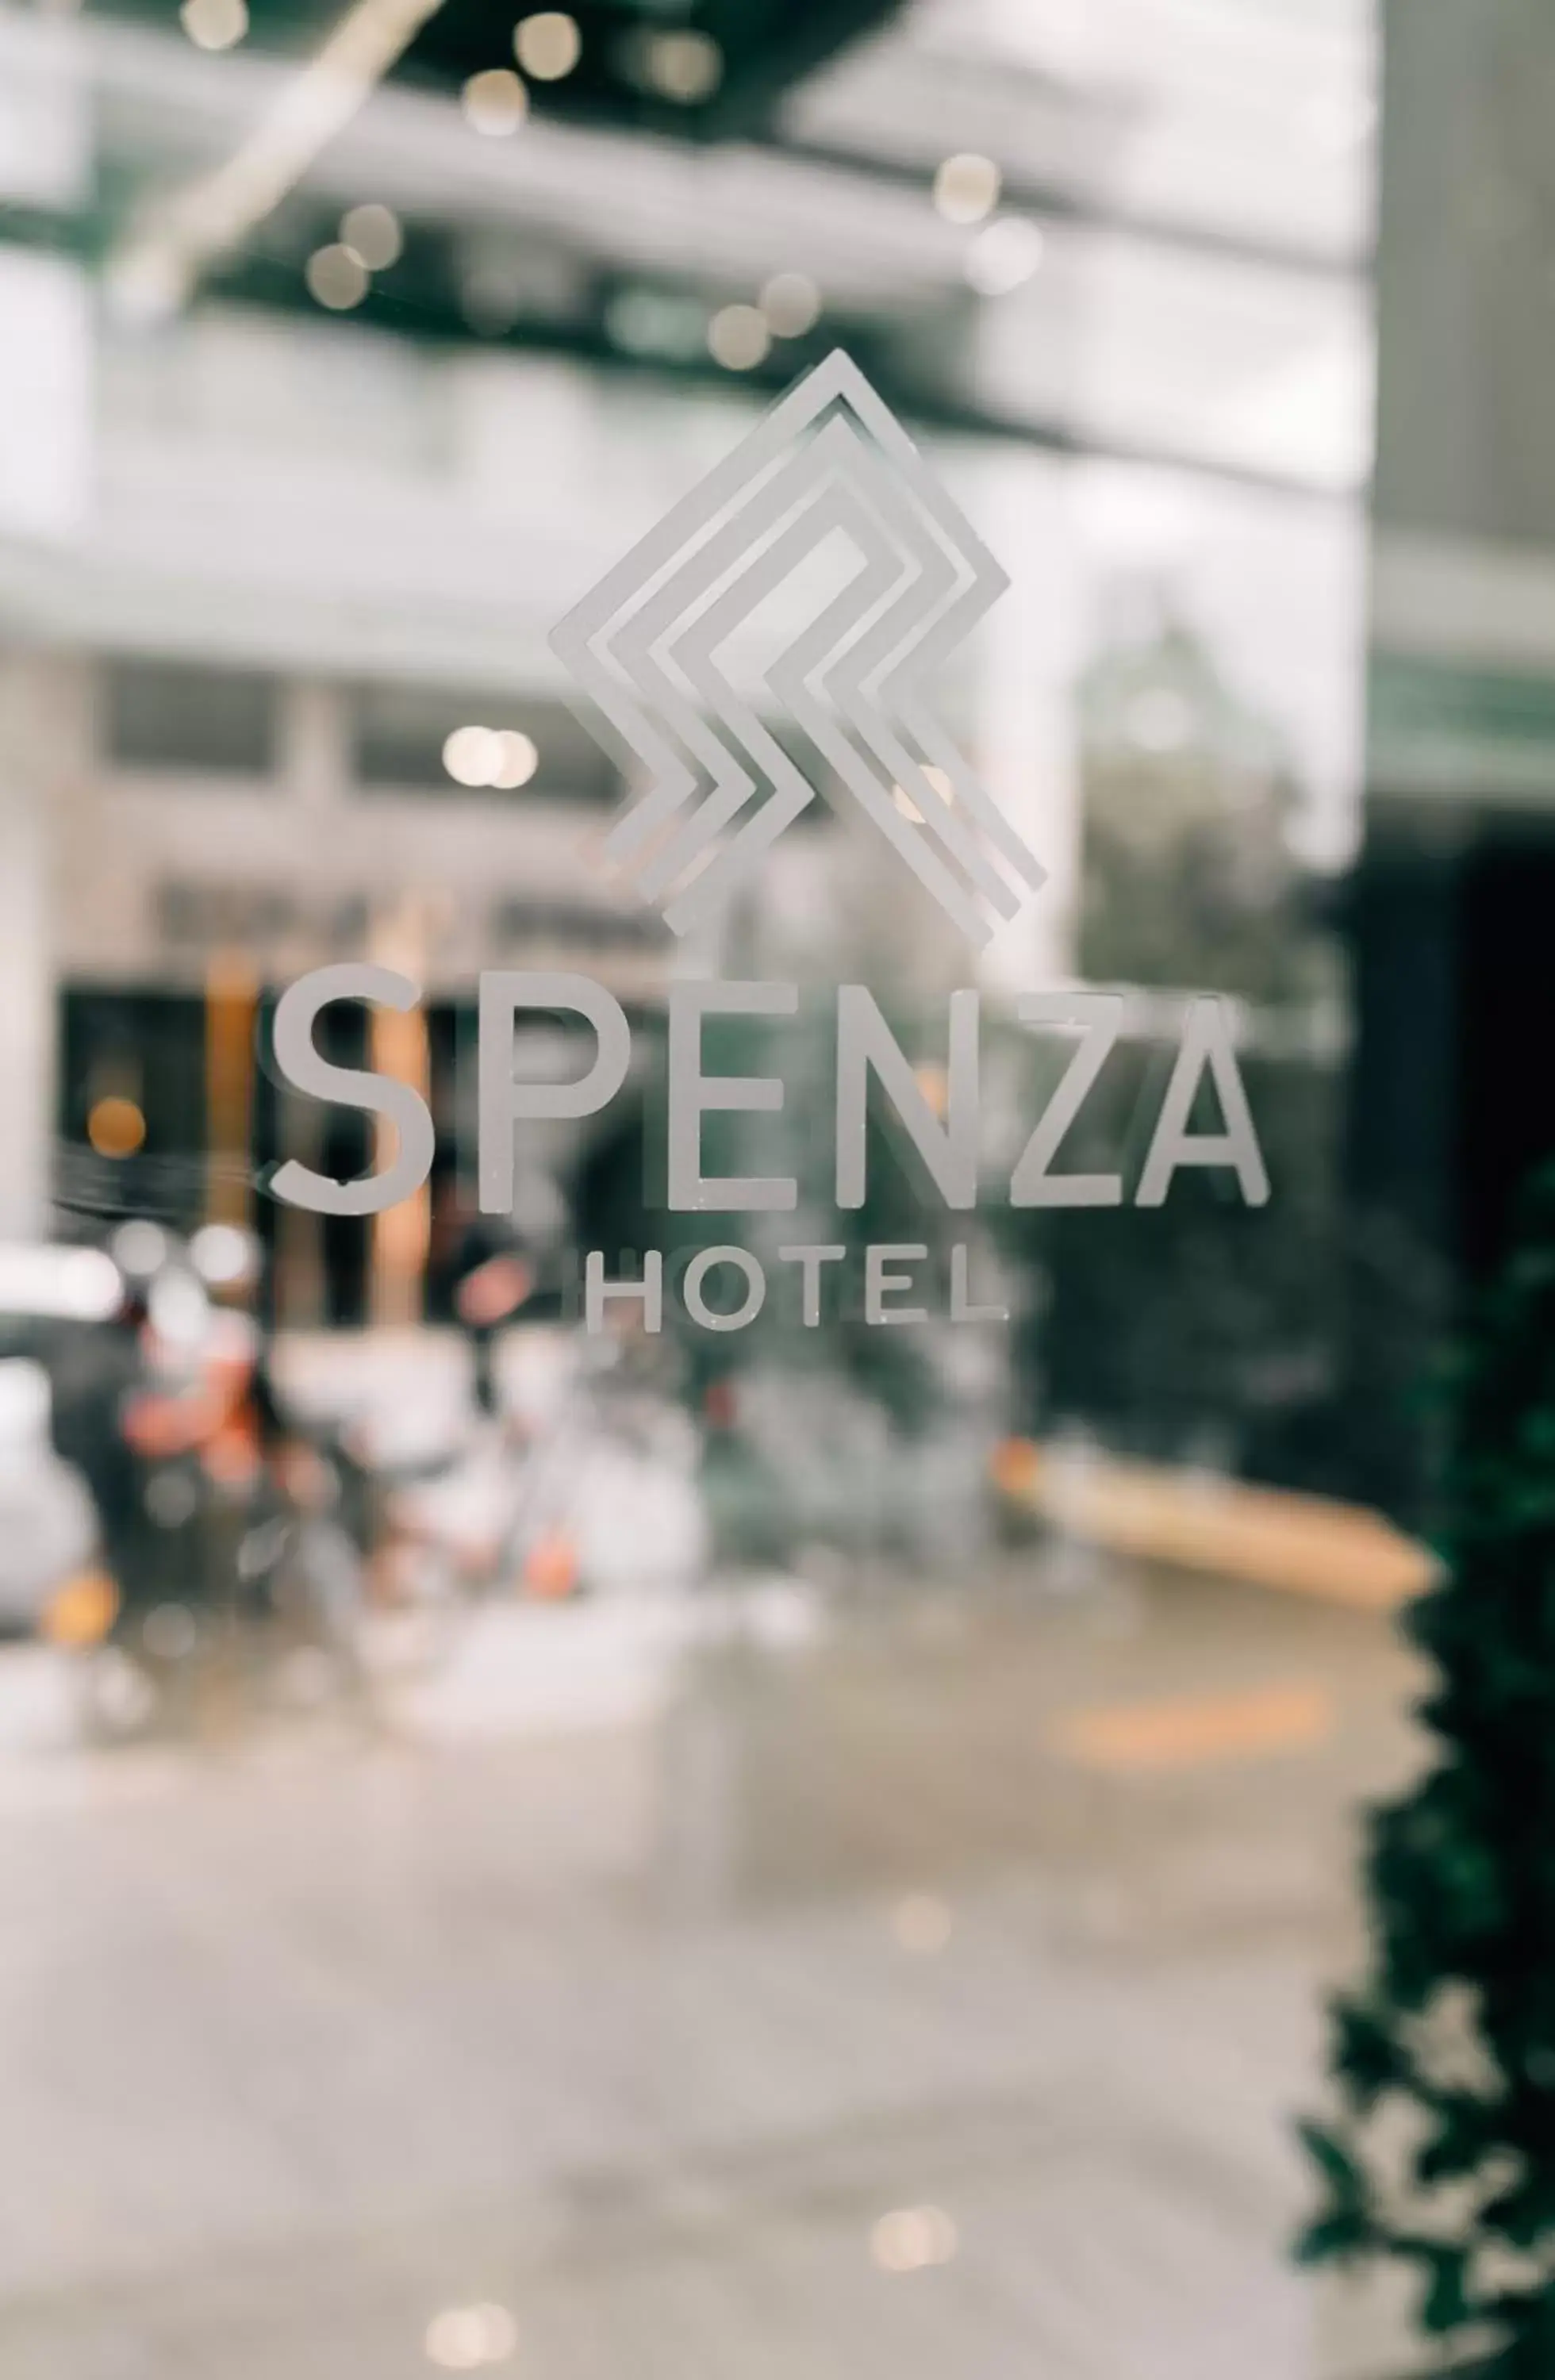 Property logo or sign in Spenza Hotel